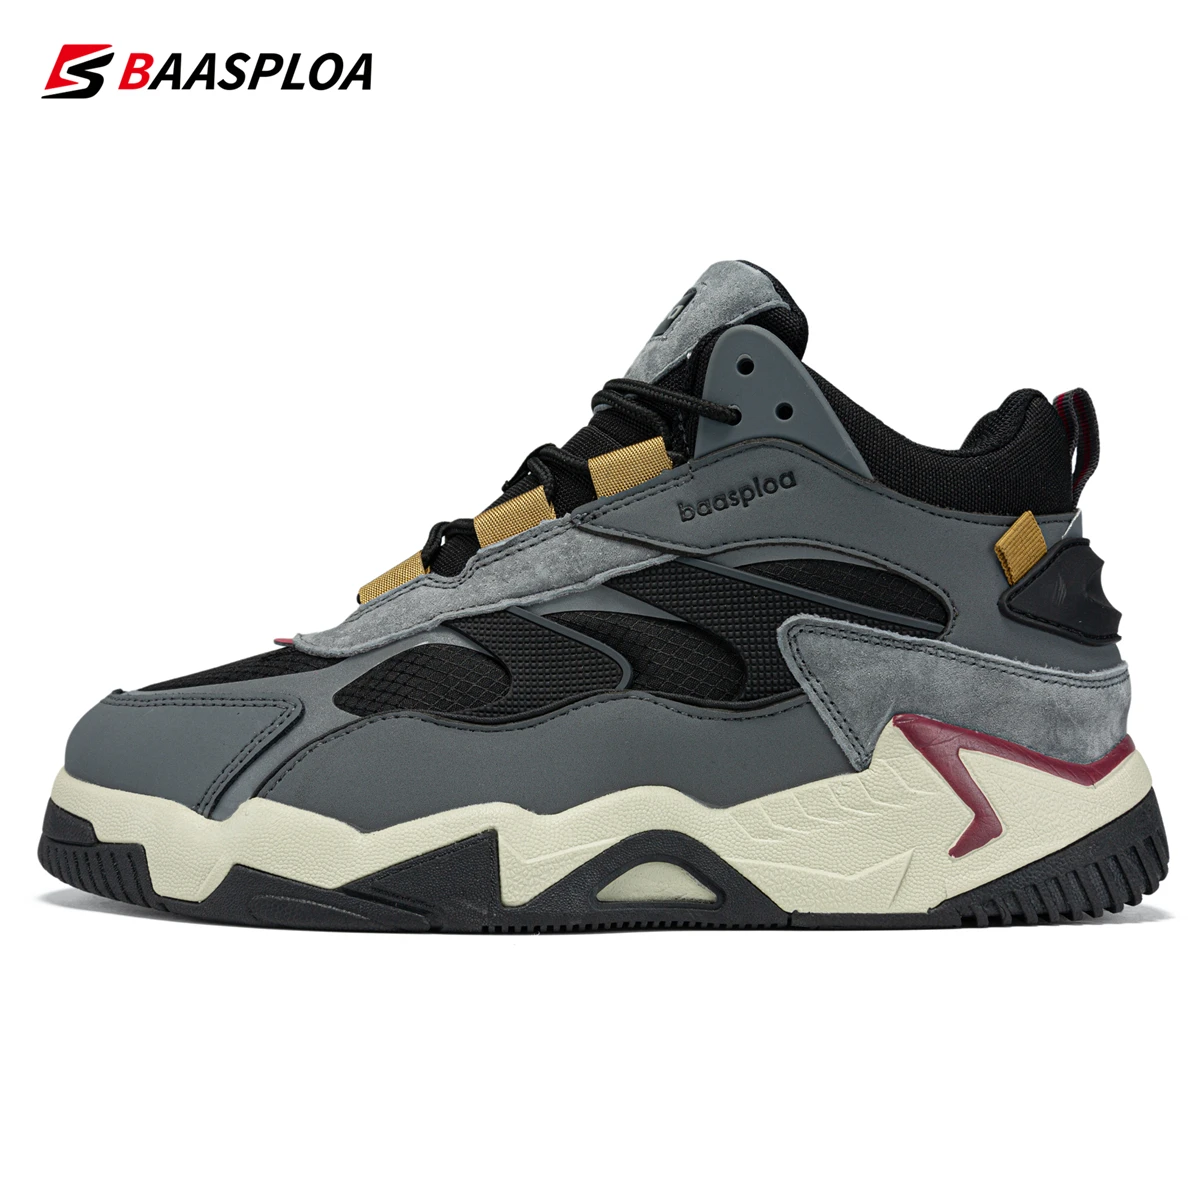 Baasploa Men Winter Sneakers Leather Waterproof Sport Shoes for Men Comfort Plush Warm Male Sneakers Non-Slip Free Shipping